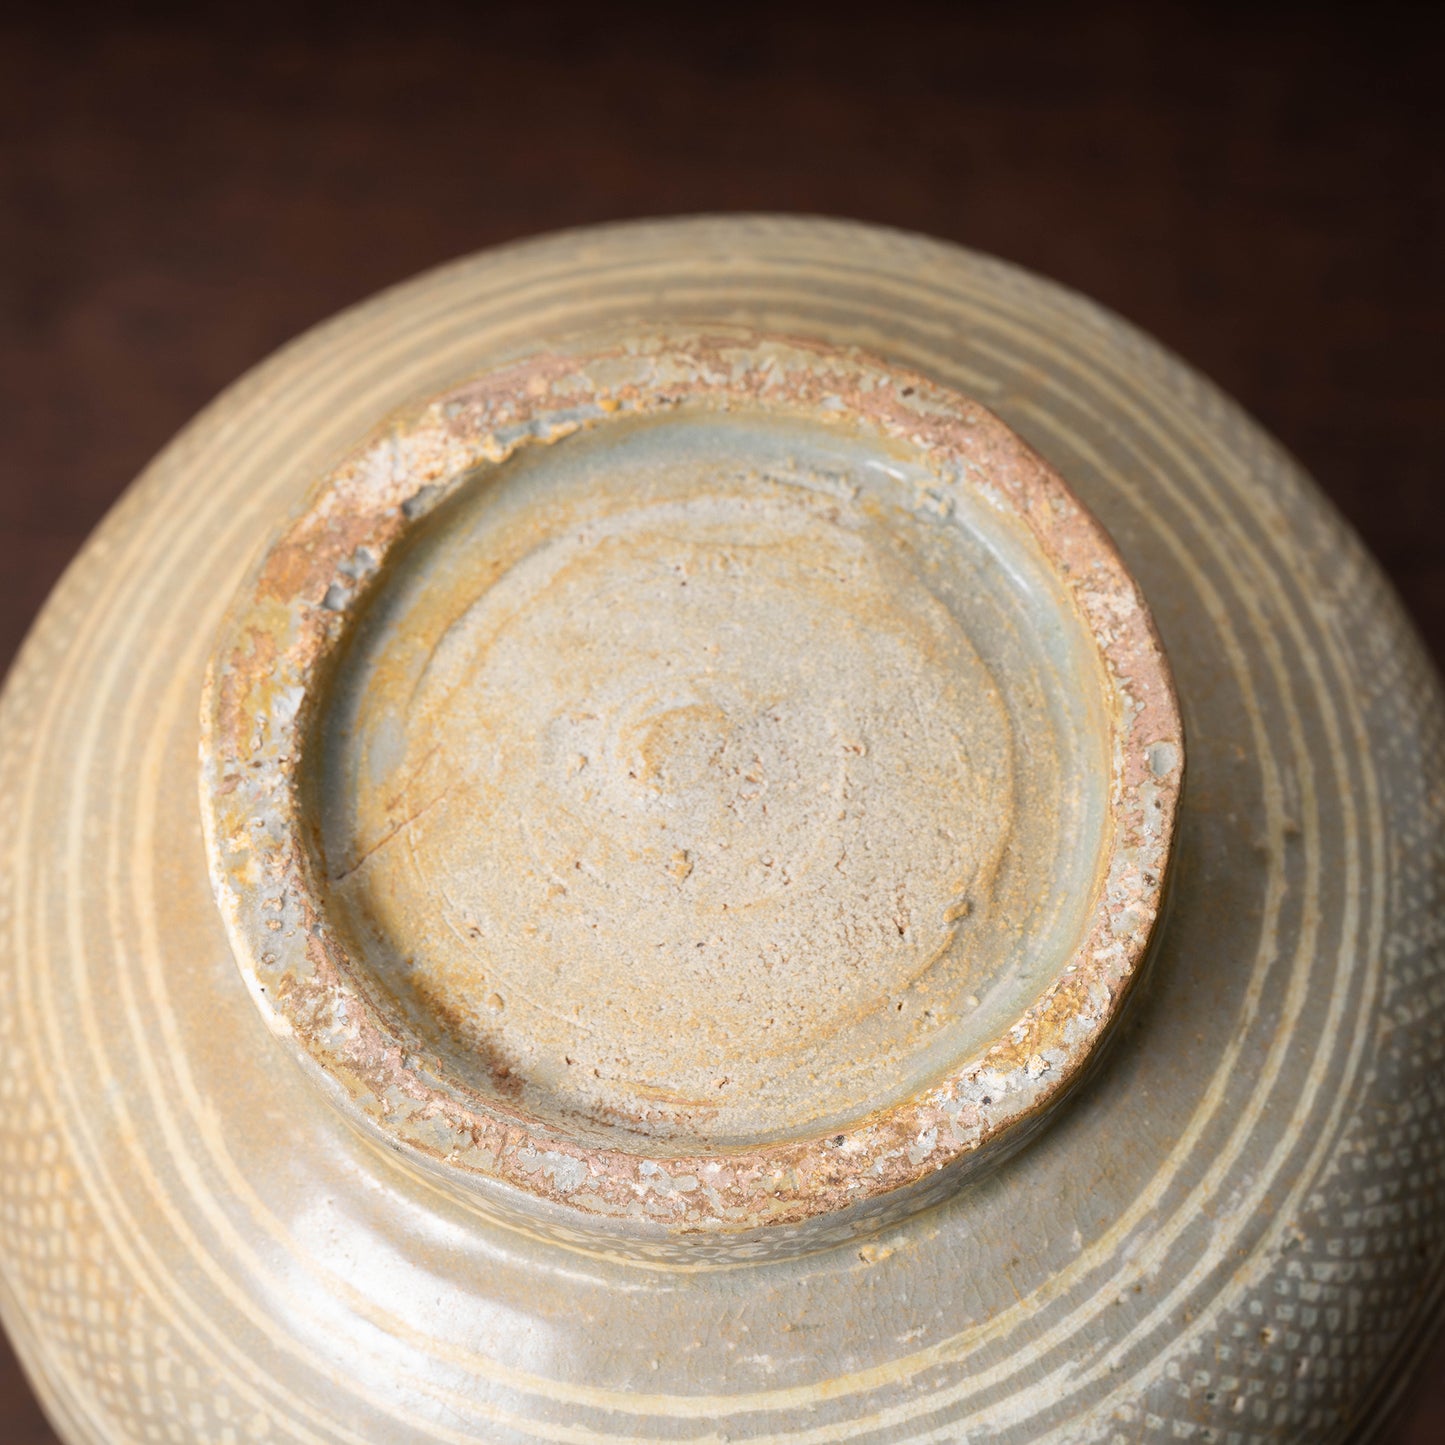 Goryeo Dynasty Celadon Mishima Bottle with Inlaid Fish Design